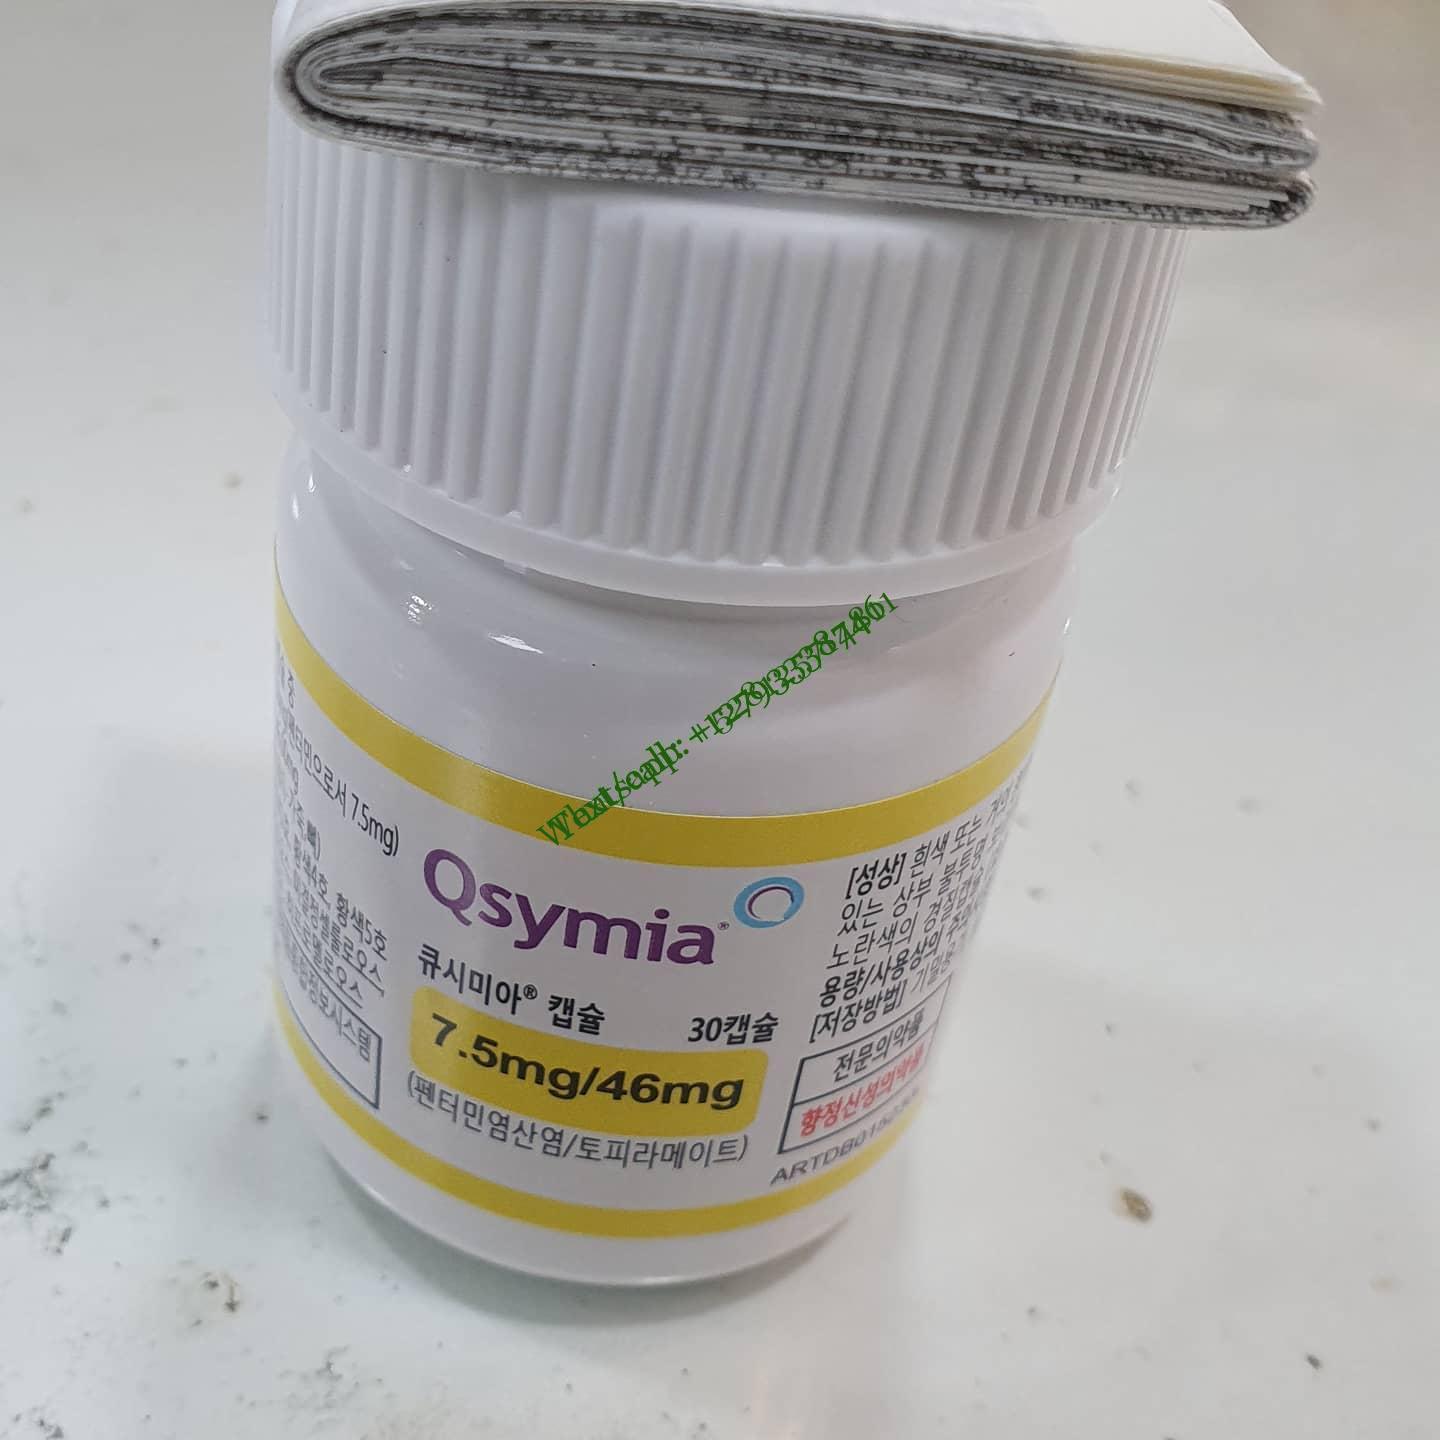 QSYMIA 7.5MG/46MG Buy Online Original bottle